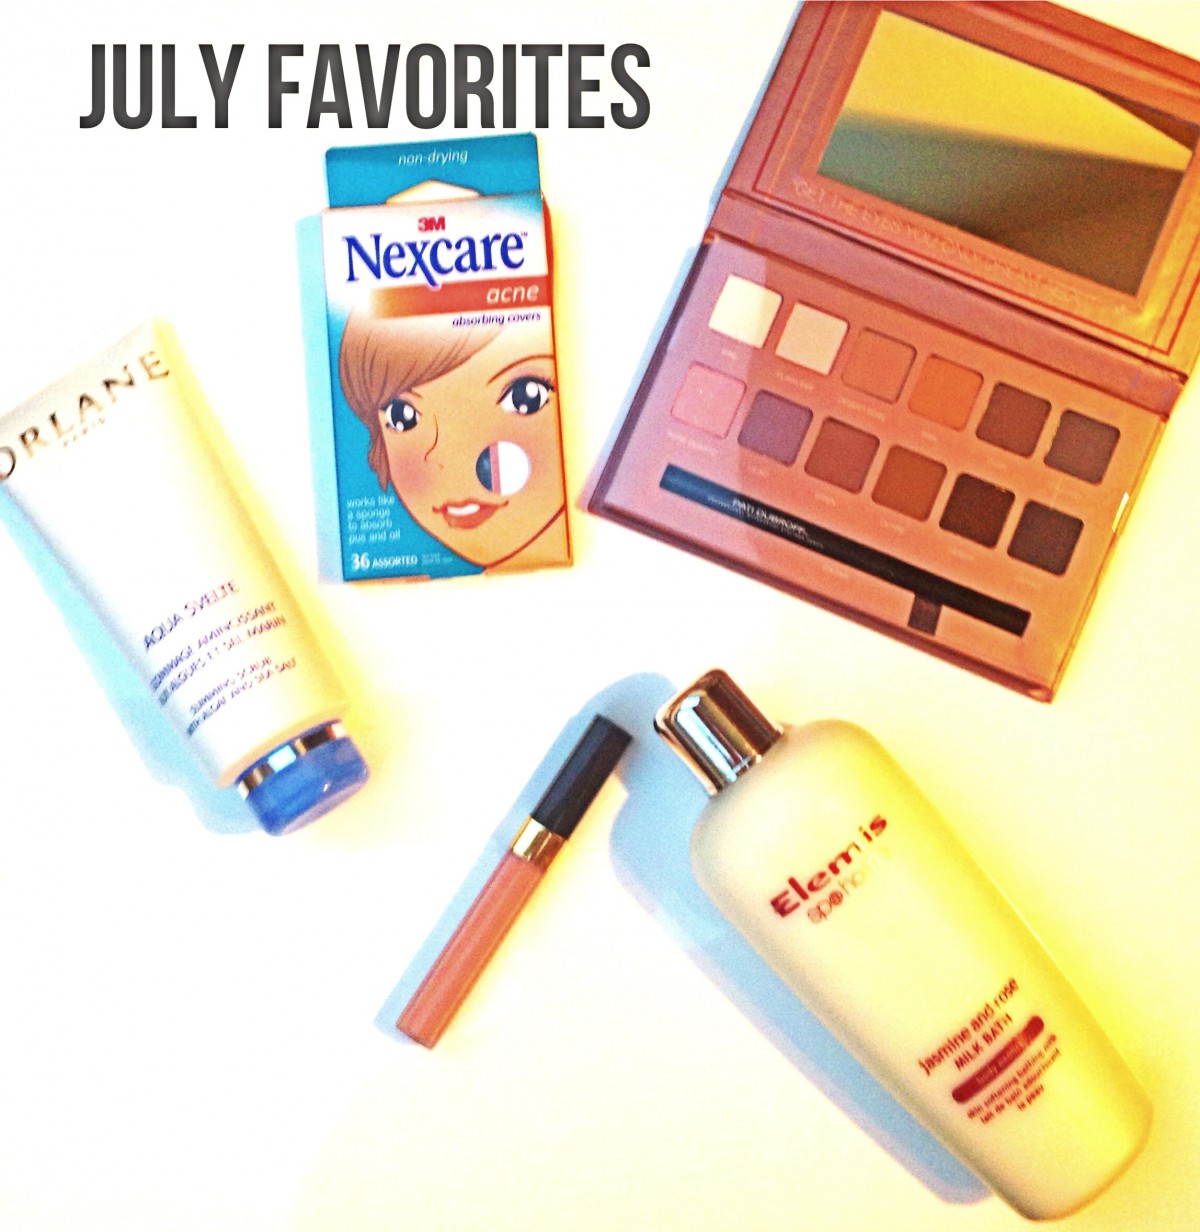 Video: July Favorites